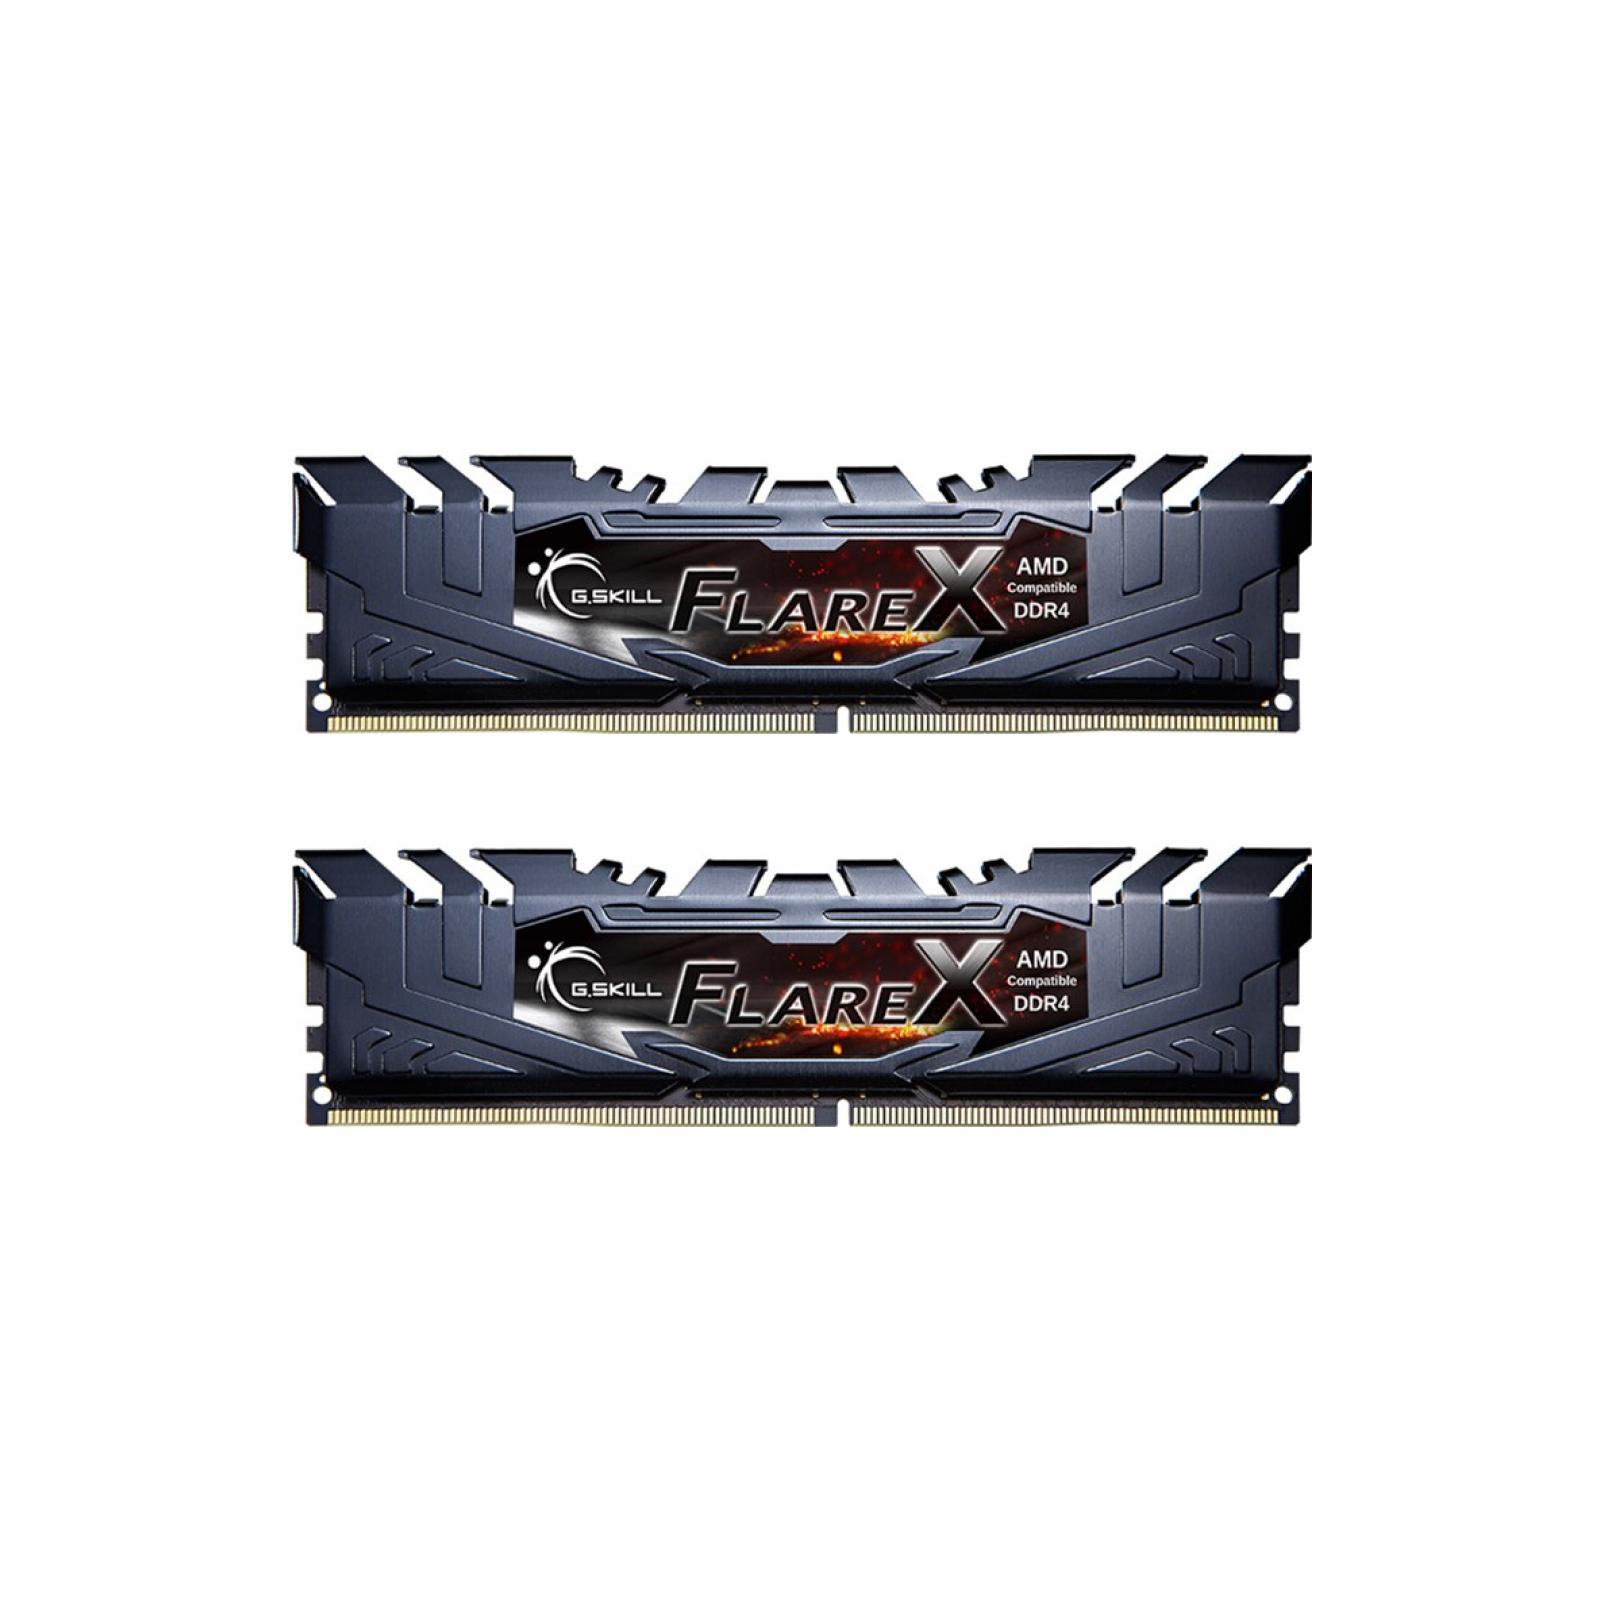 Модуль памяти для компьютера DDR4 16GB (2x8GB) 3200 MHz FlareX Black G.Skill (F4-3200C16D-16GFX)